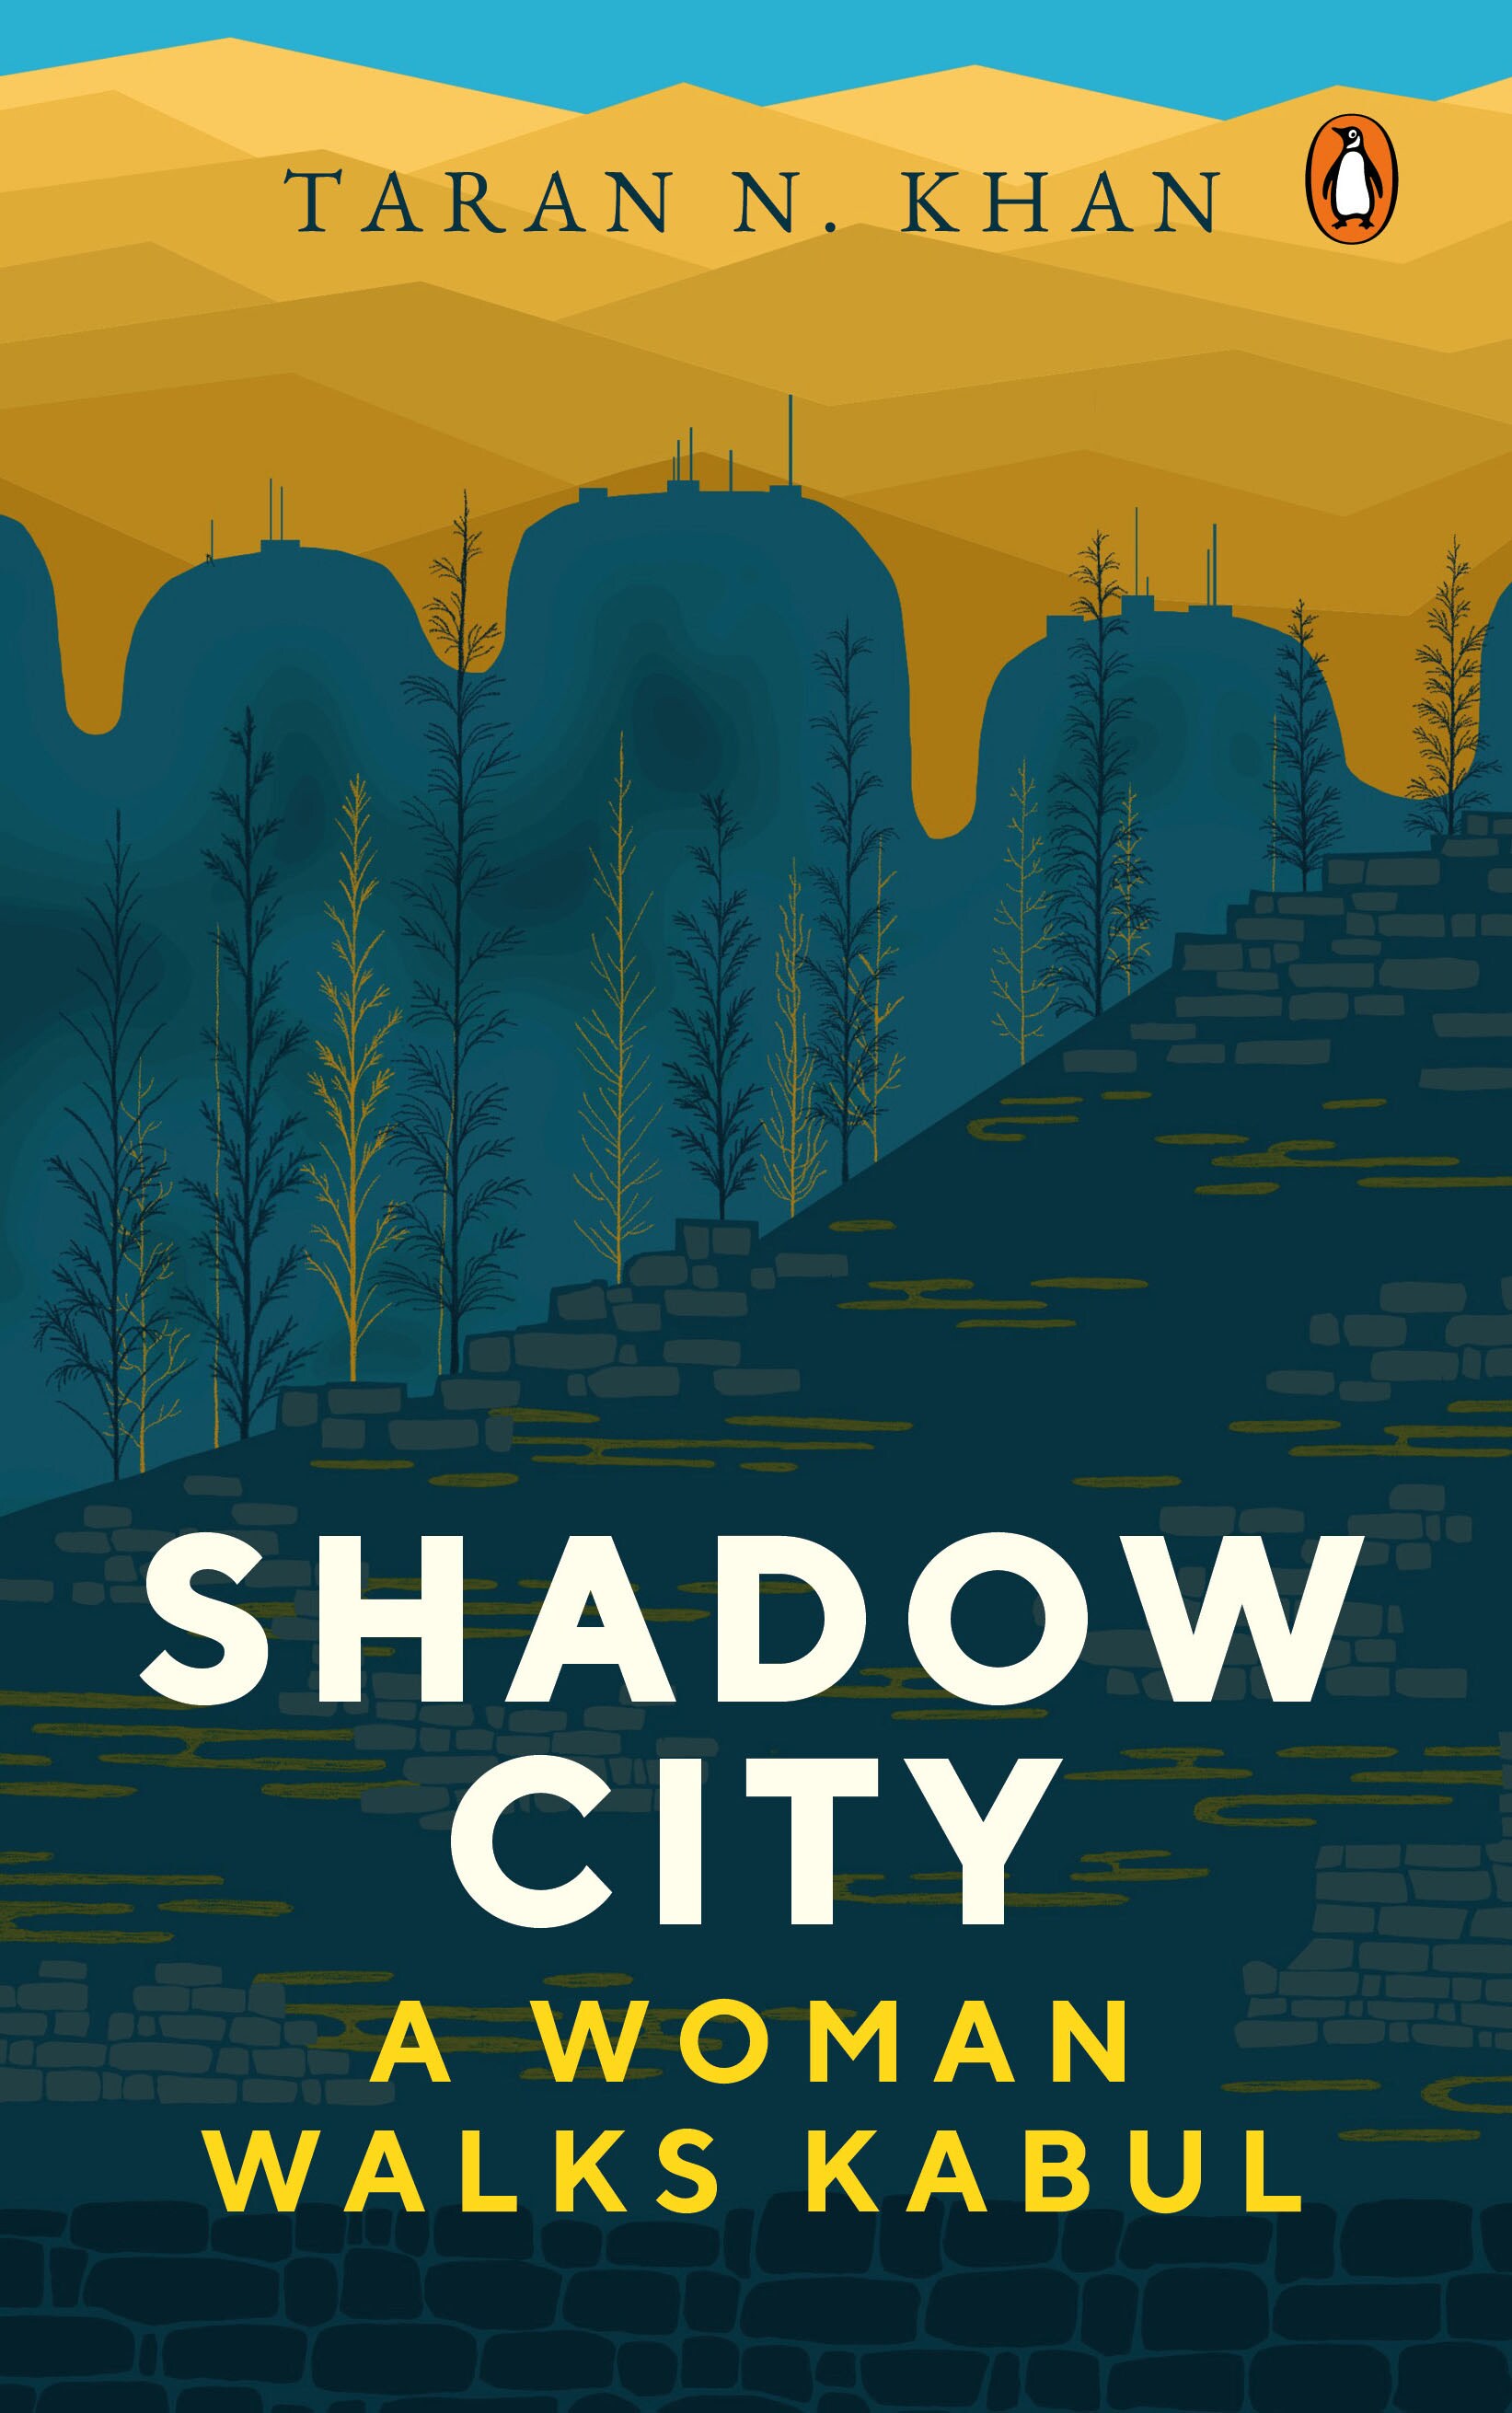 Taran Khan's book 'Shadow City.